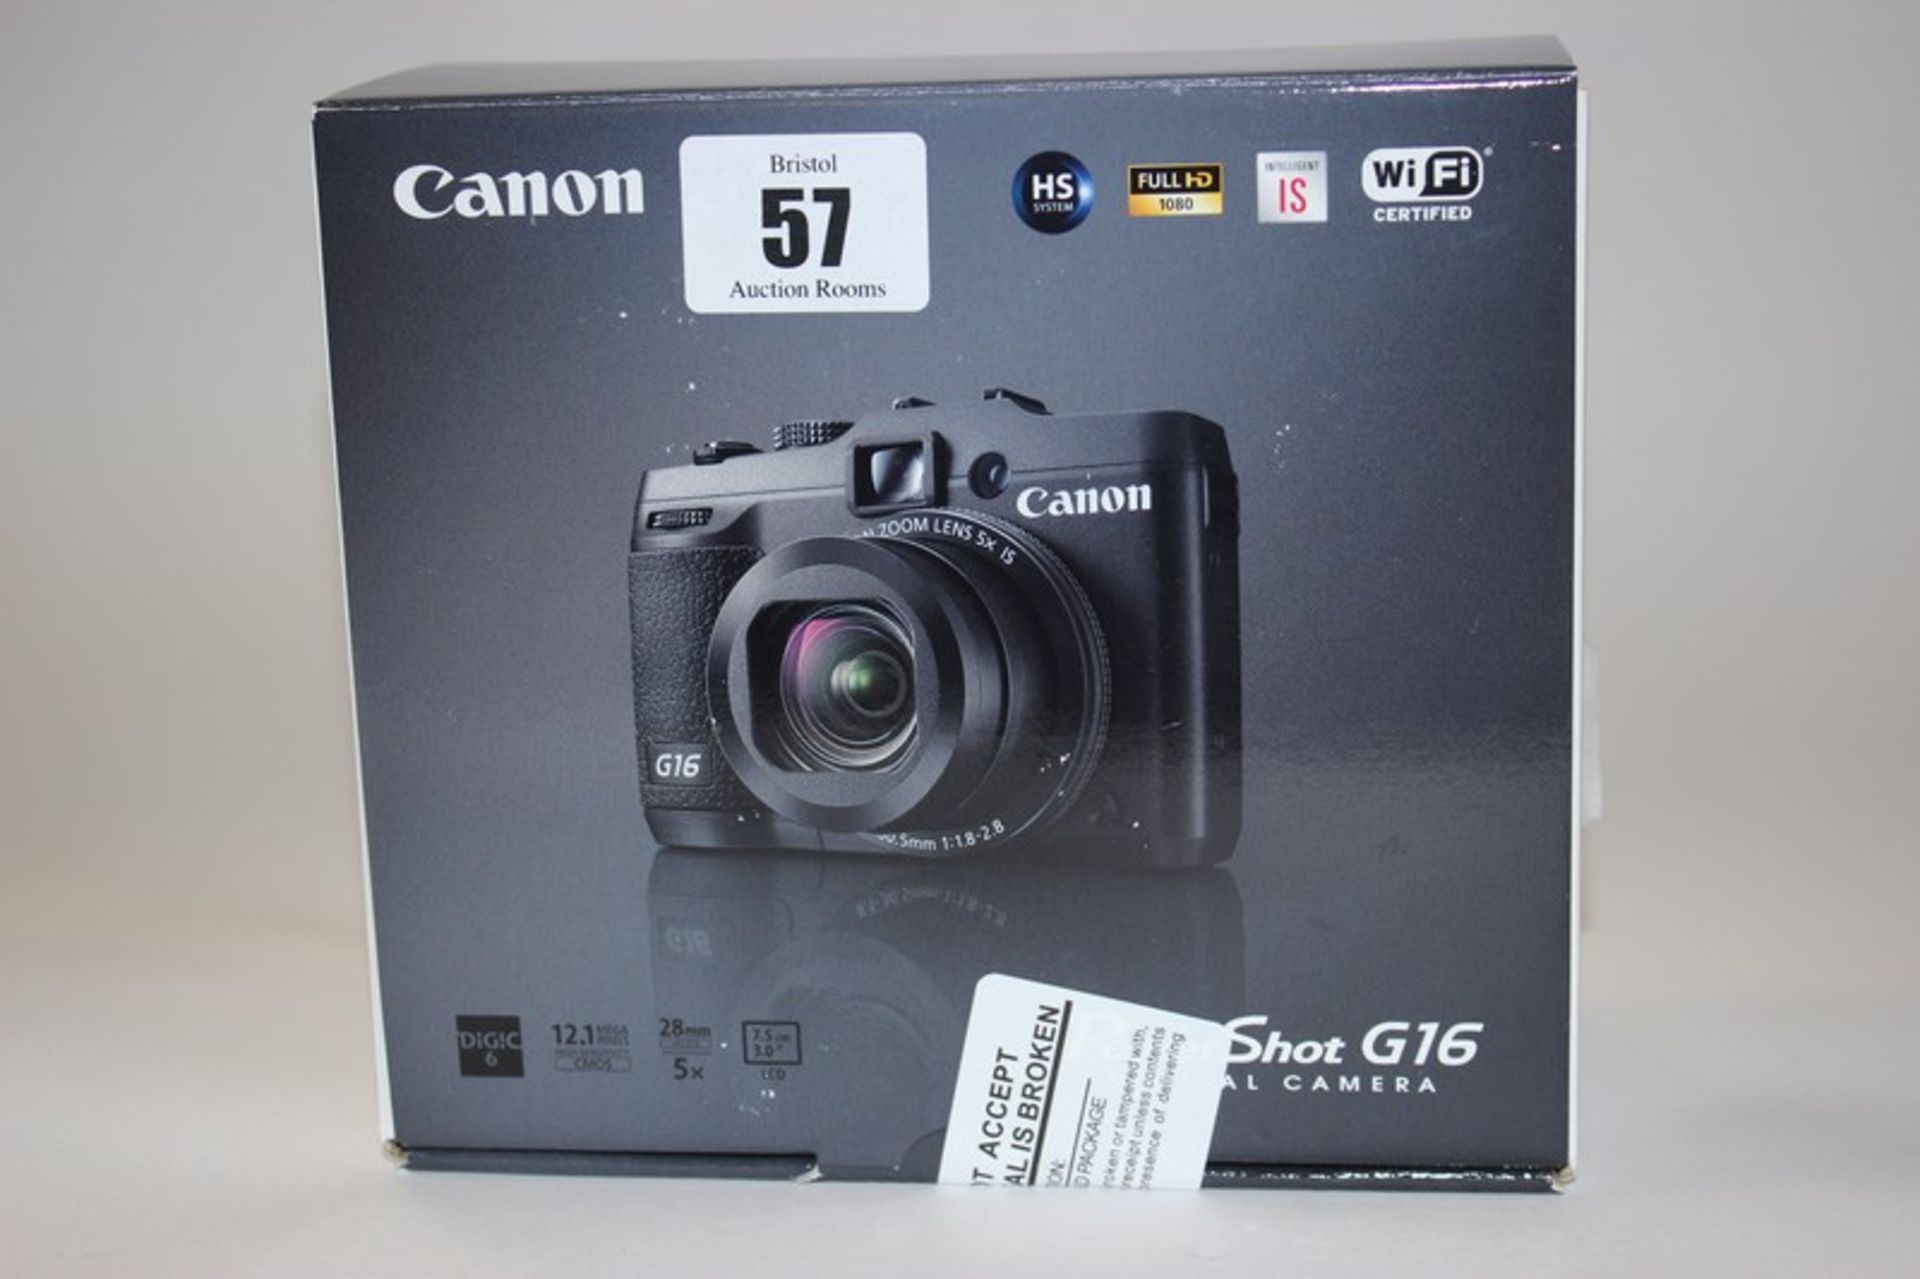 A black Canon PowerShot G16 digital camera (Boxed as new).